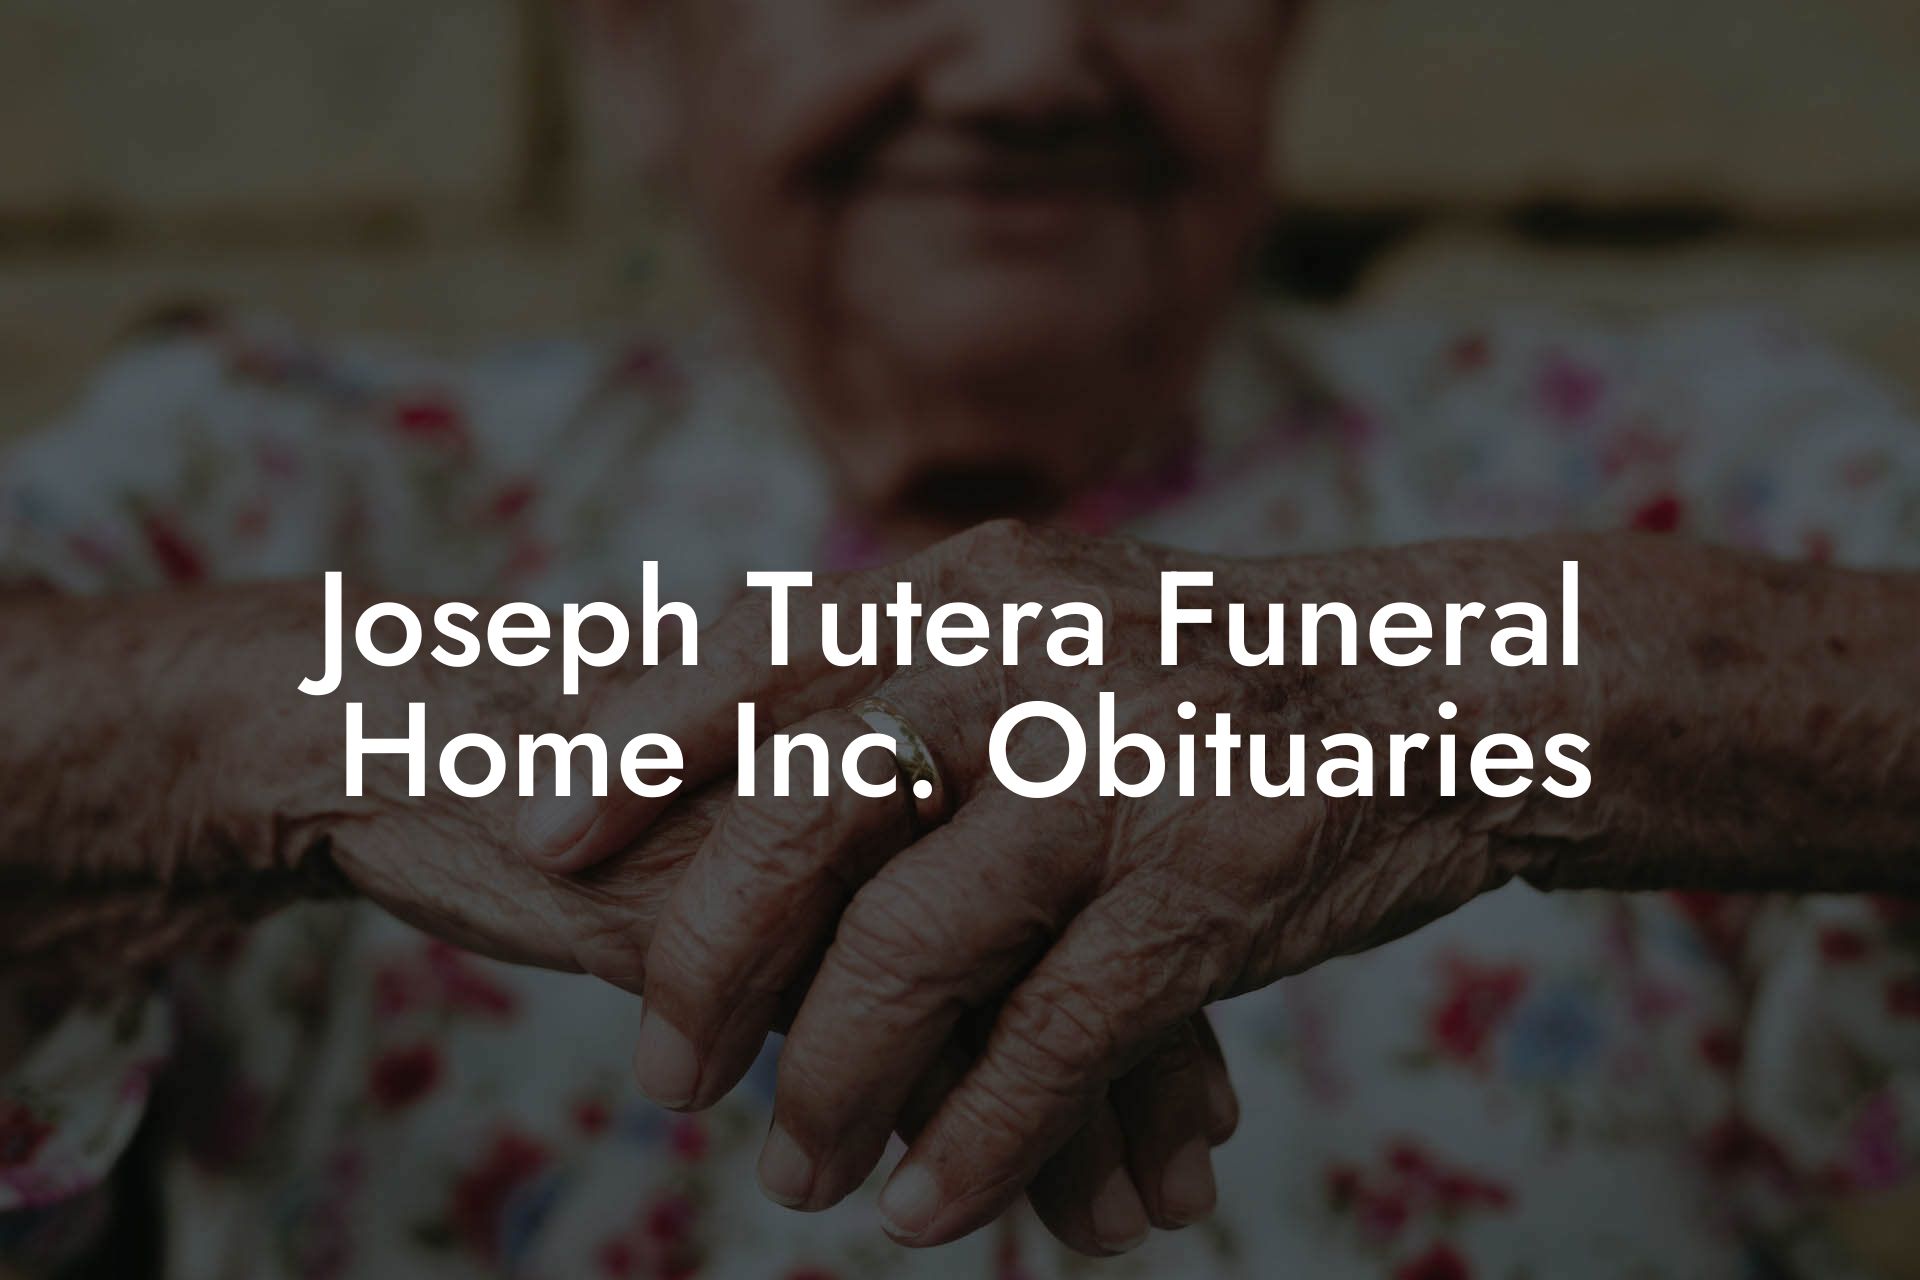 Joseph Tutera Funeral Home Inc. Obituaries